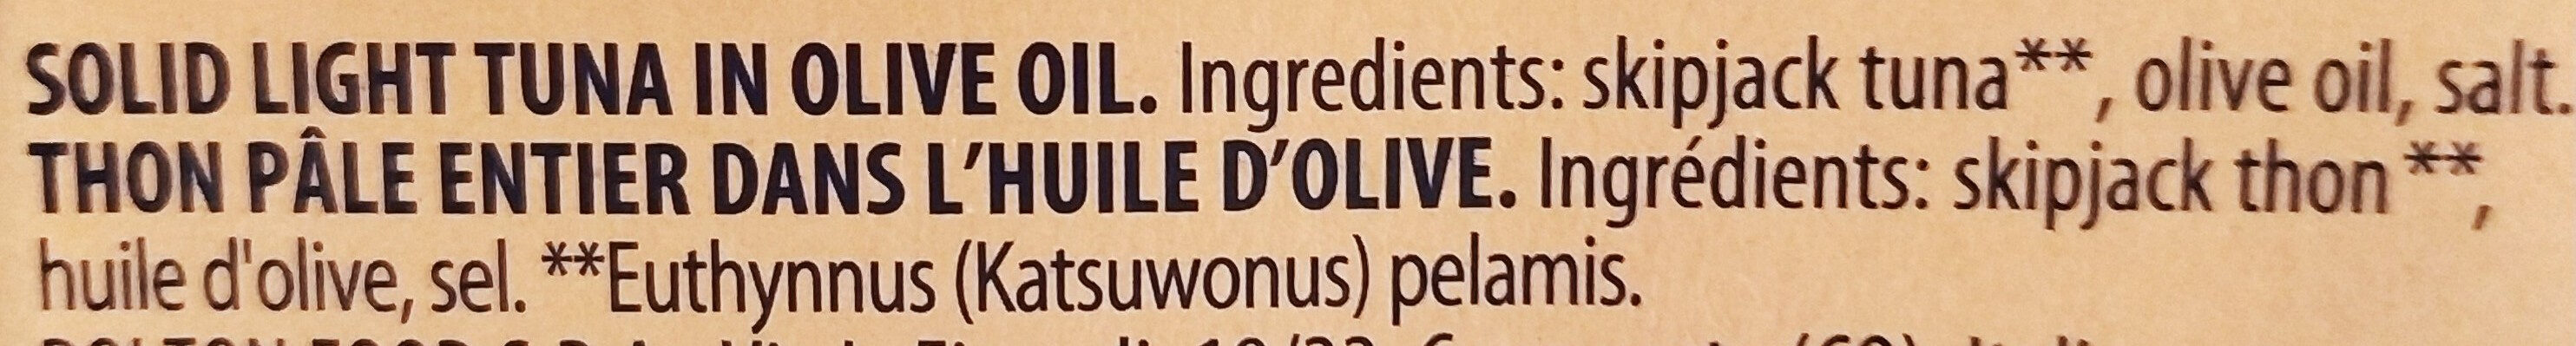 Solid Light Tuna in Olive Oil - Ingredients - en